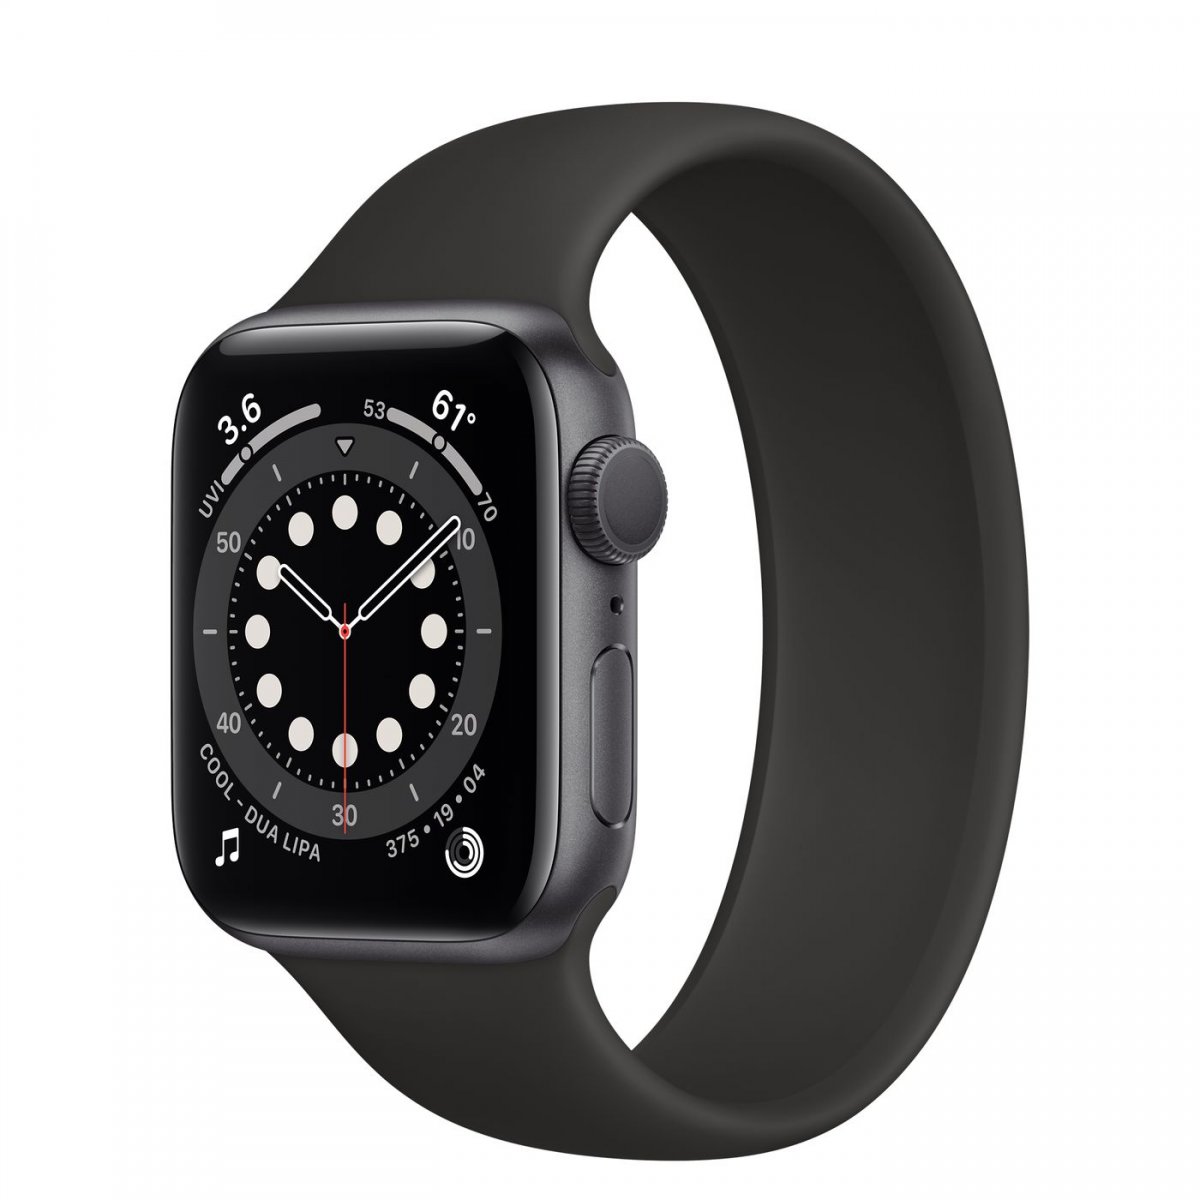 Řemínek iMore Solo Loop Apple Watch Series 1/2/3 42mm - Černá (S)